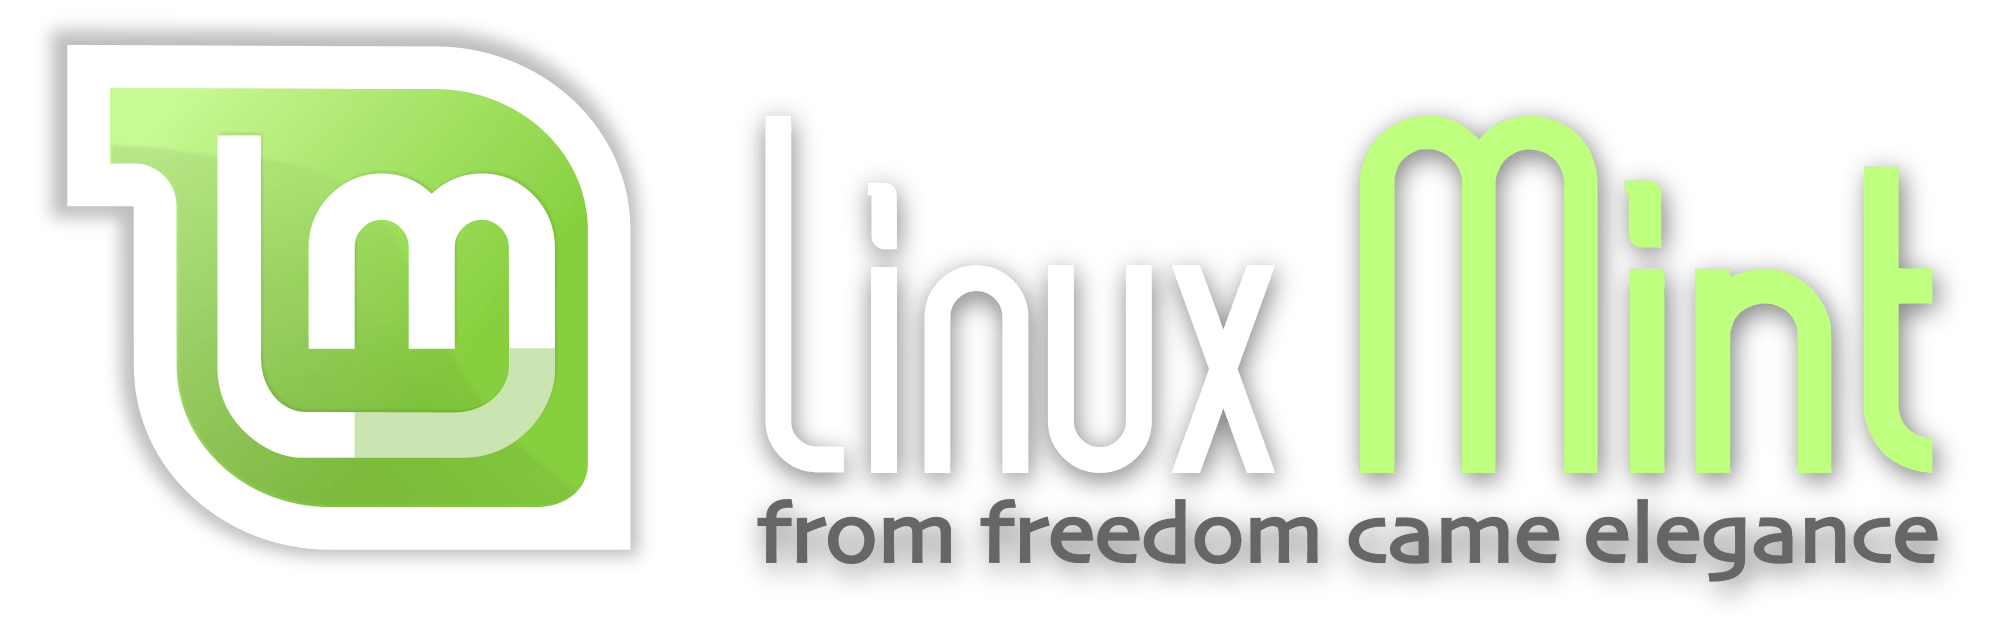 Linux Mint Logo - File:Linux Mint Official Logo.svg - Wikimedia Commons